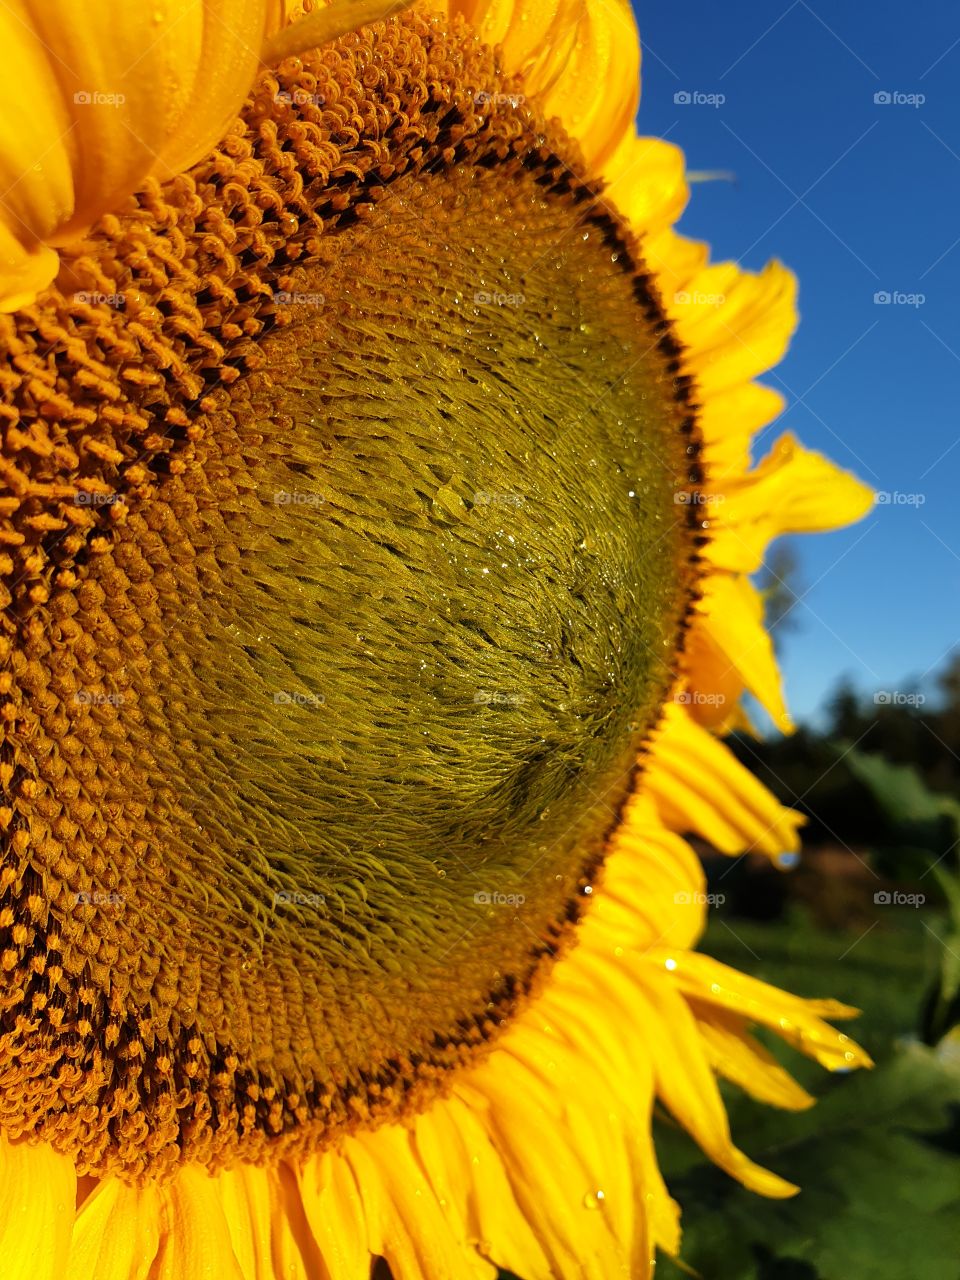 A yellow sunflower in closeup.